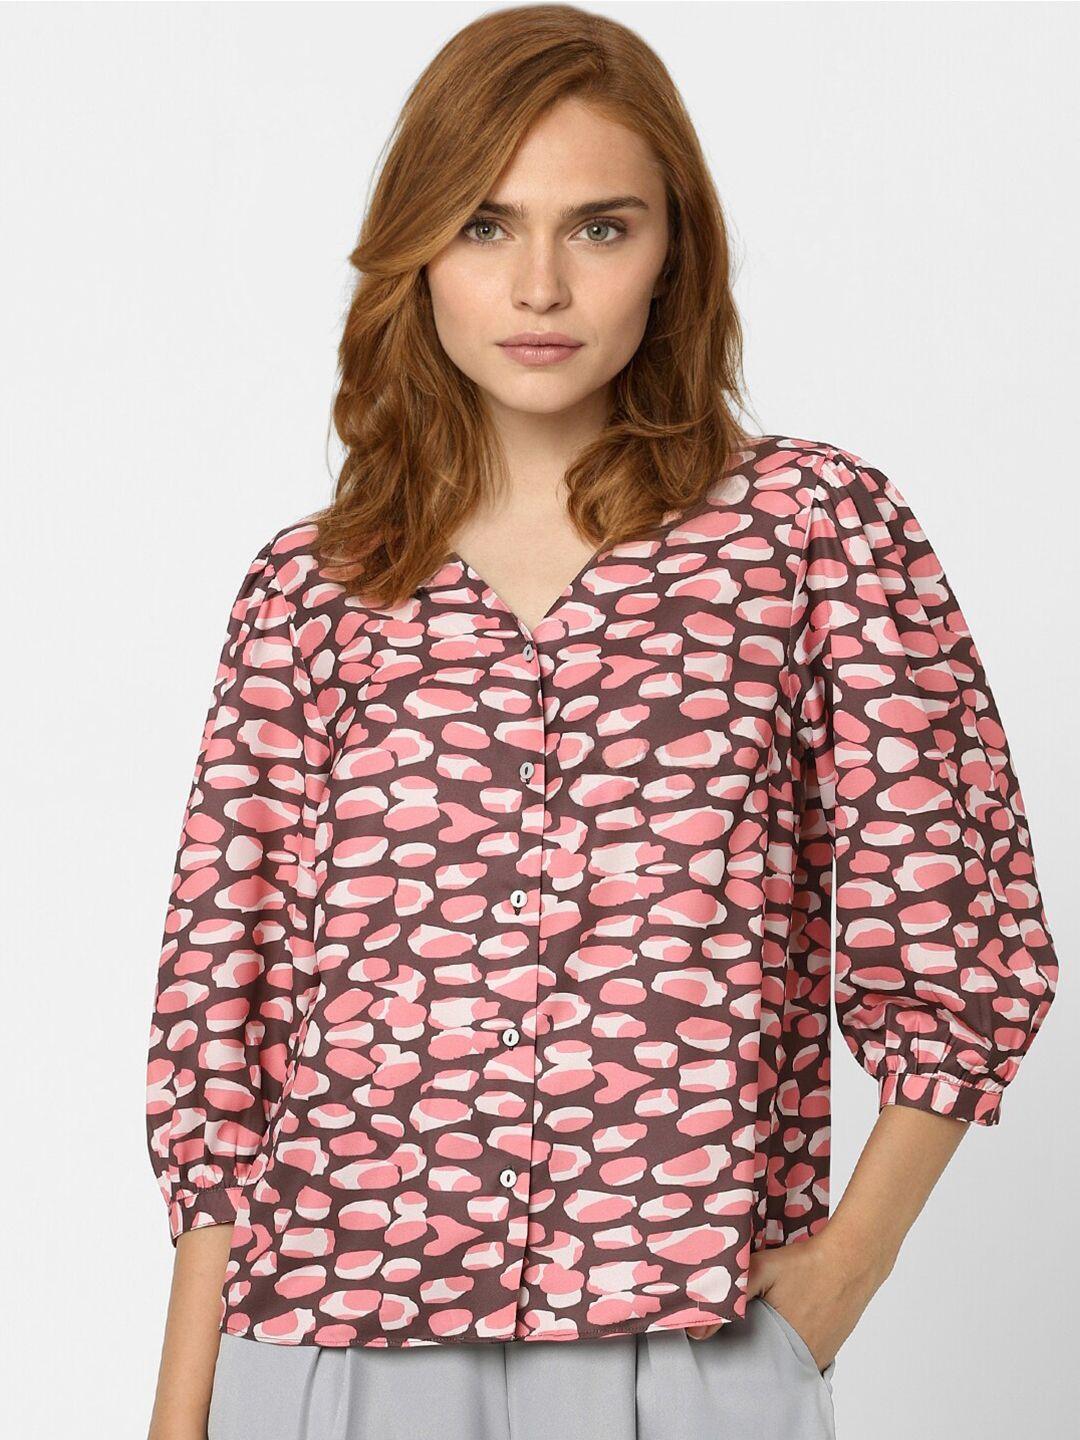 vero moda brown & pink geometric print shirt style top